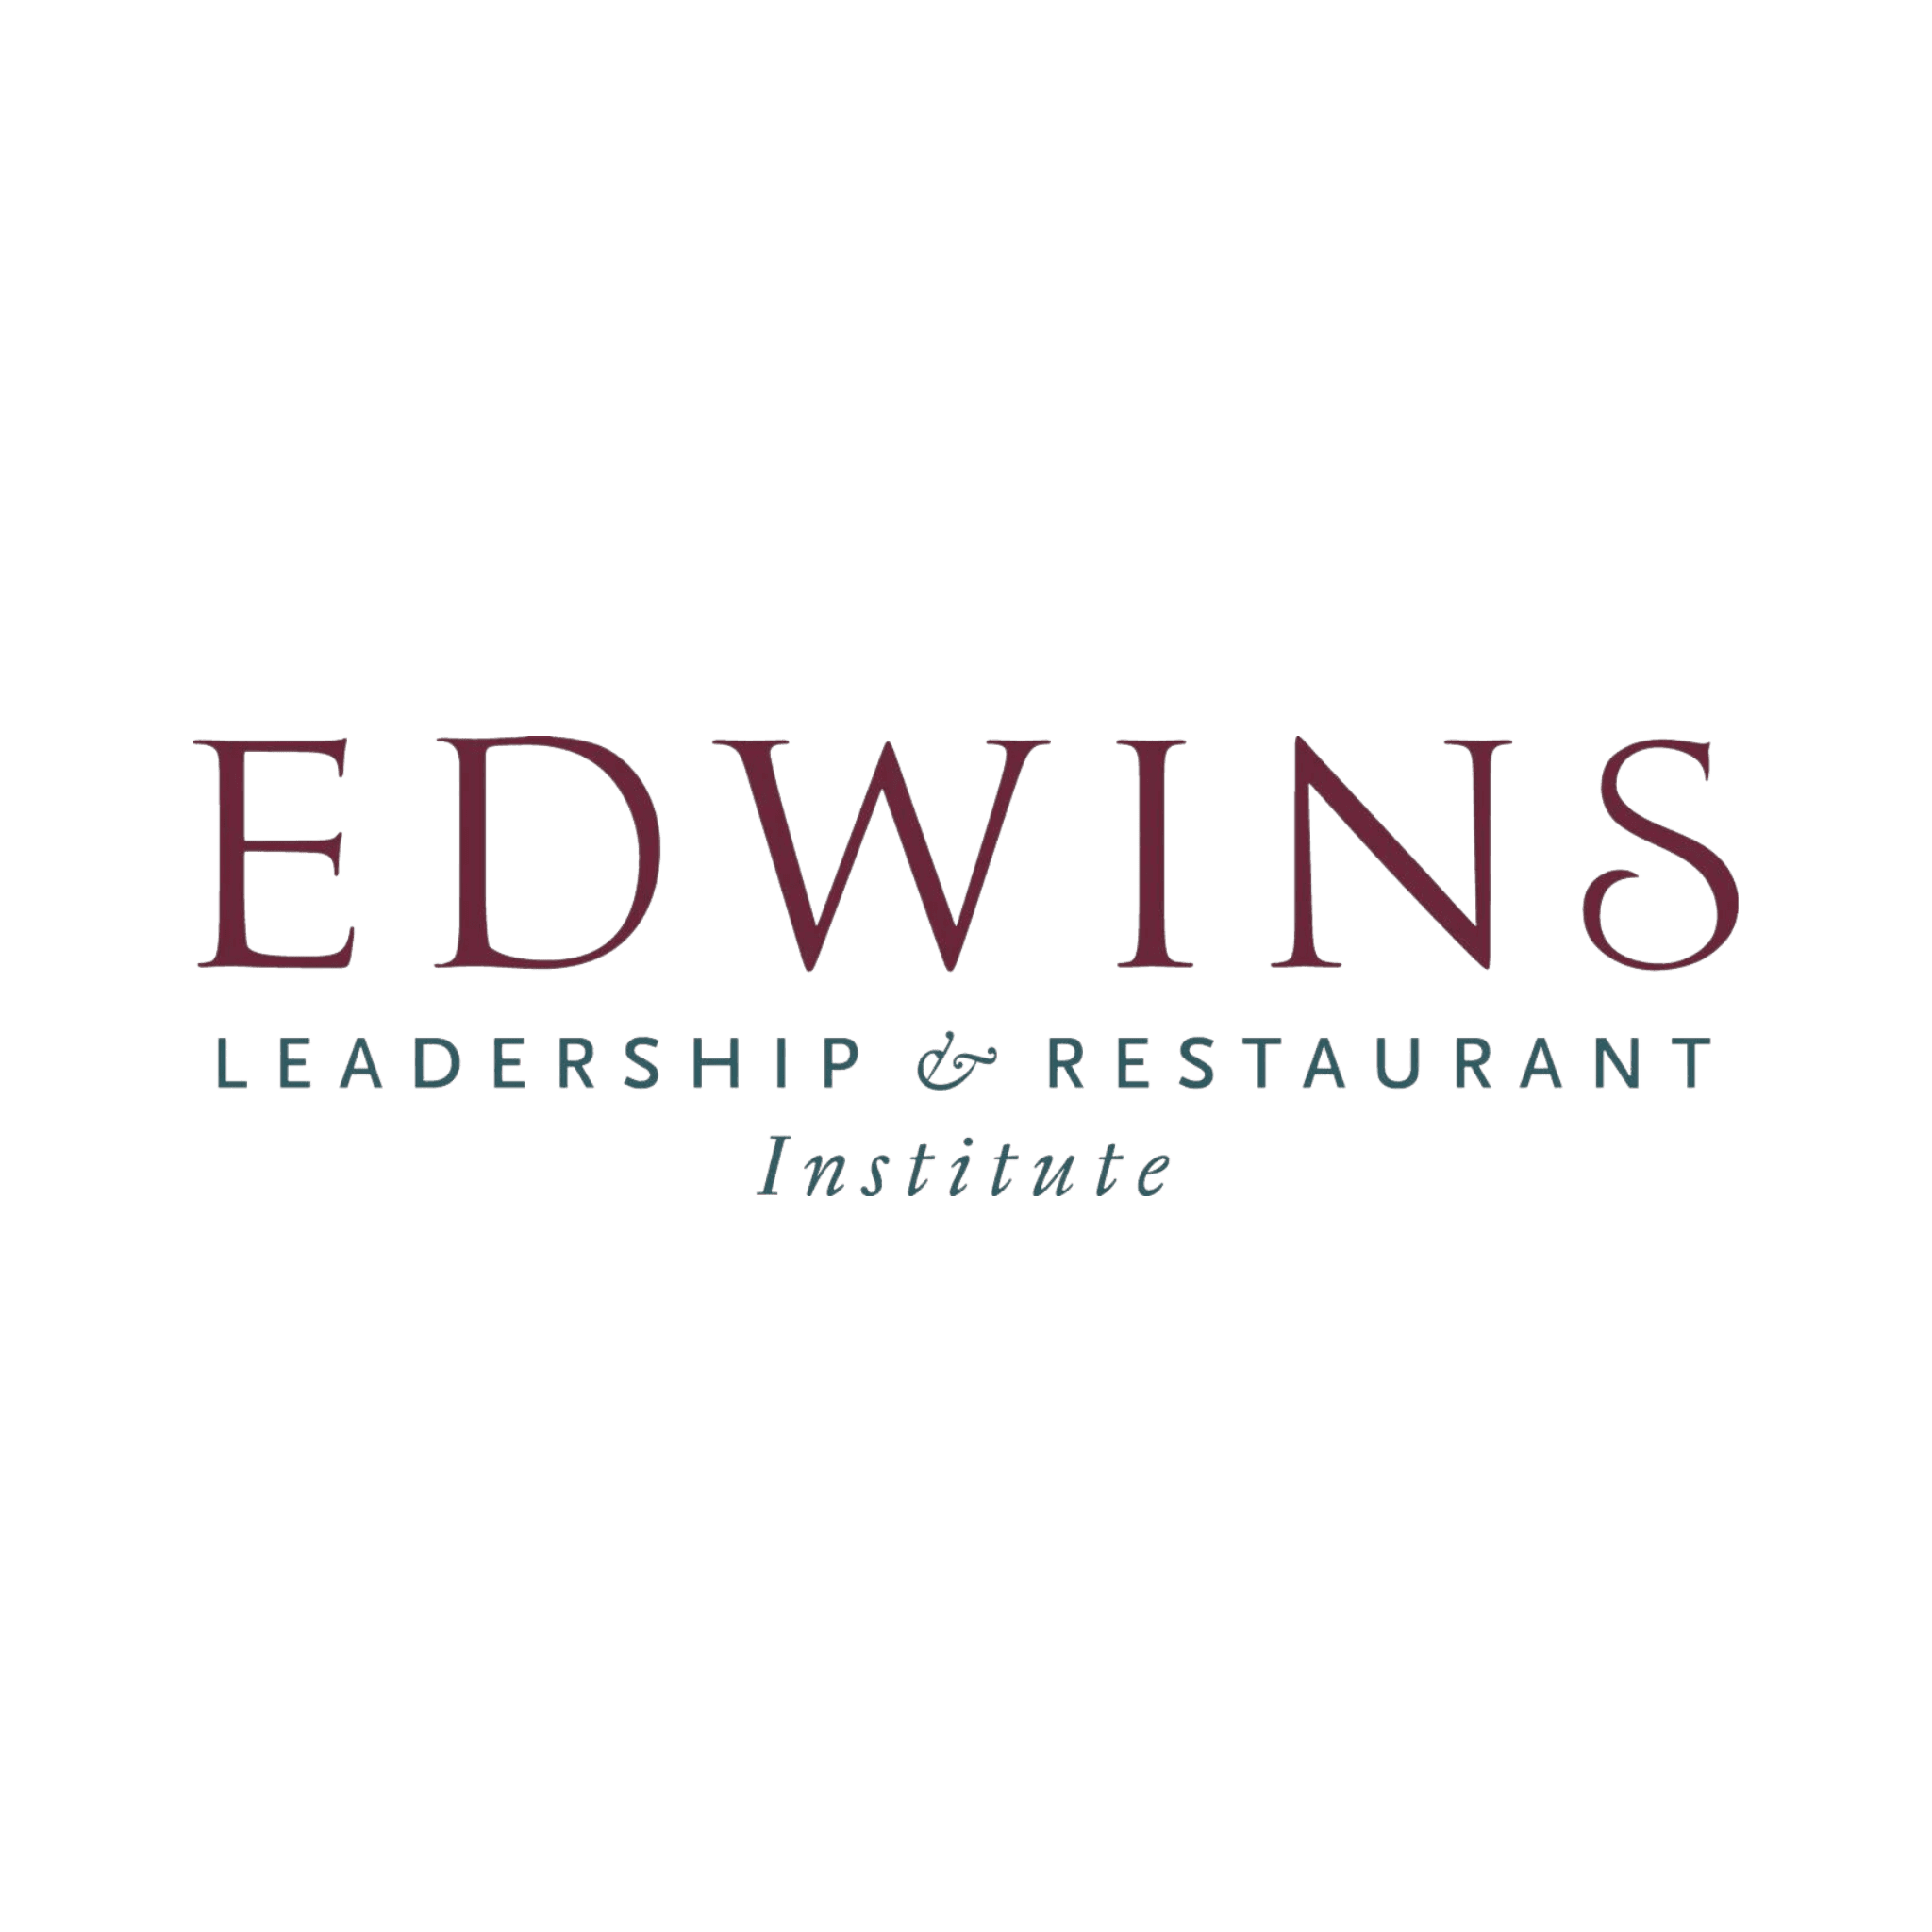 EDWINS